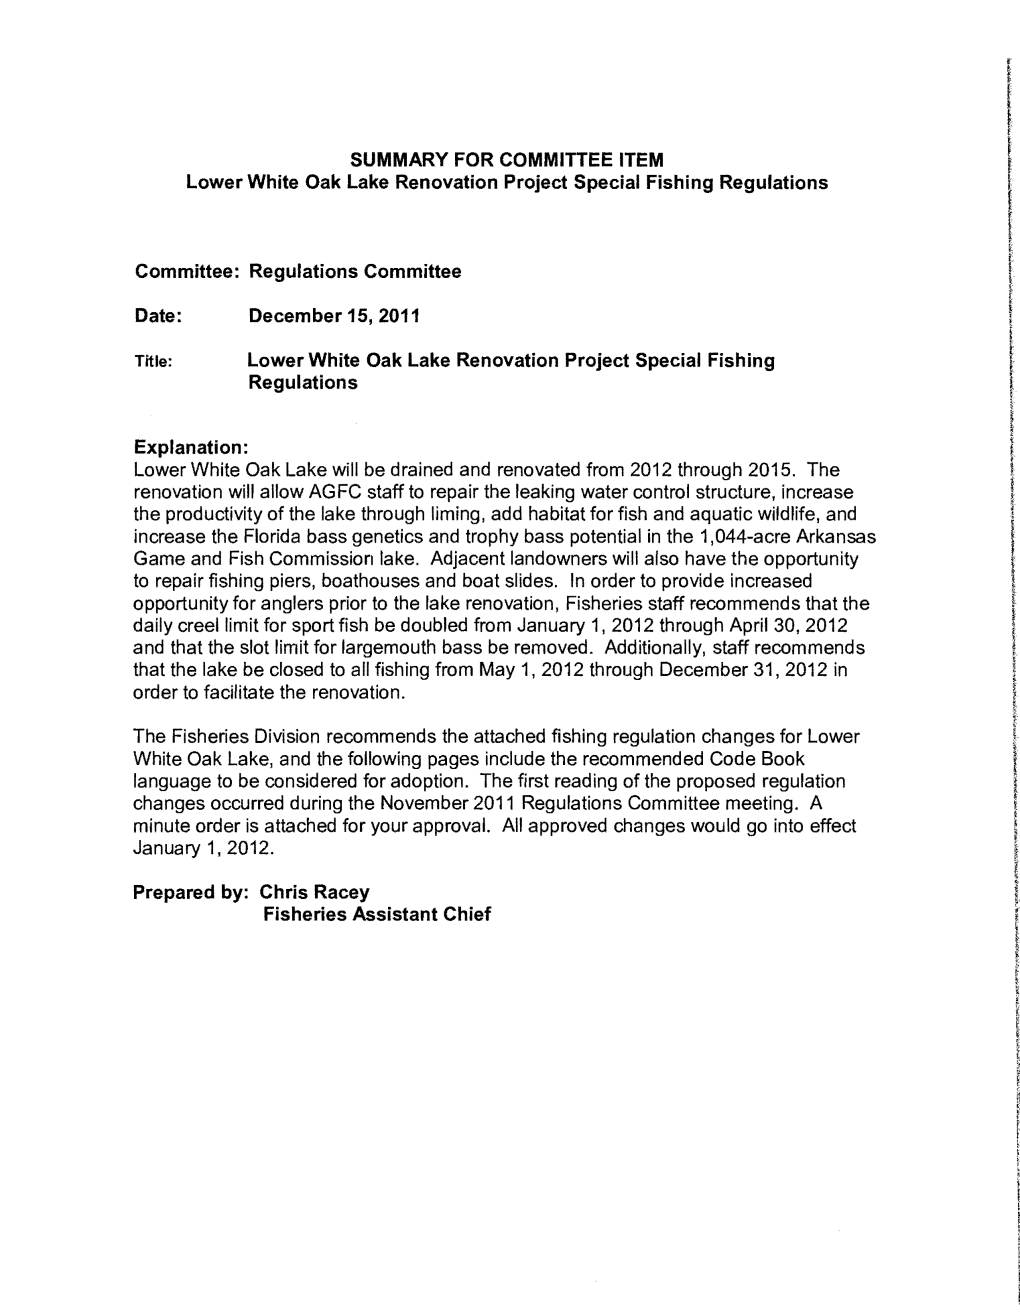 Lower White Oak Lake Renovation Project Special Fishing Regulations